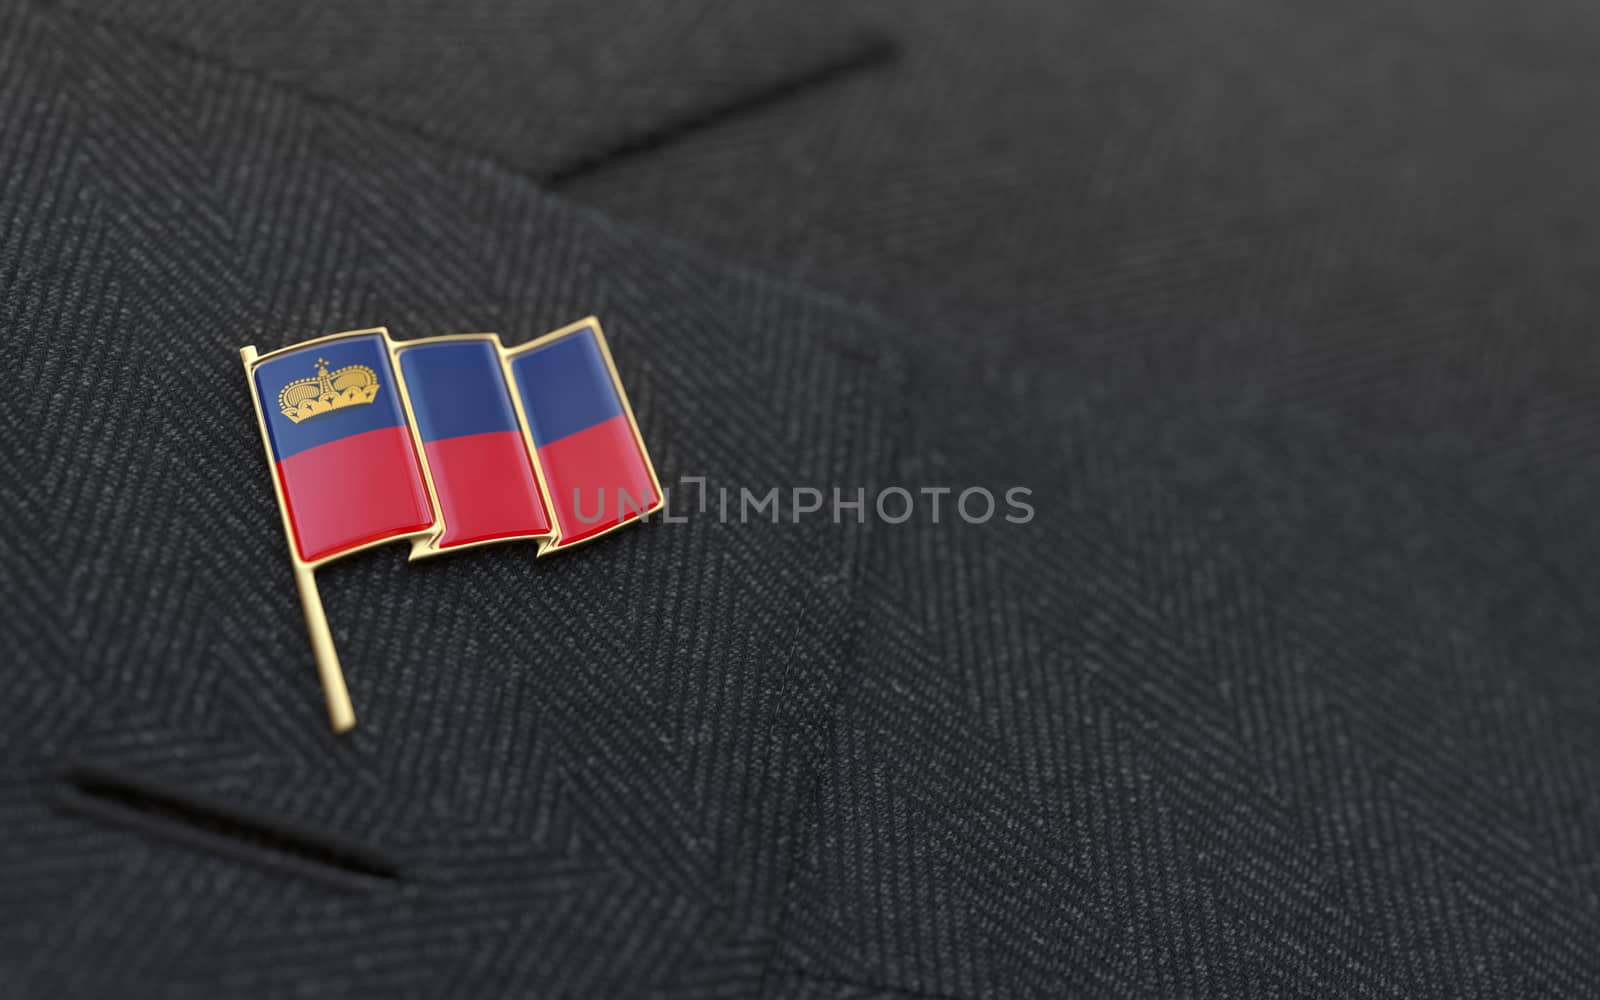 Liechtenstein flag lapel pin on the collar of a business suit jacket shows patriotism